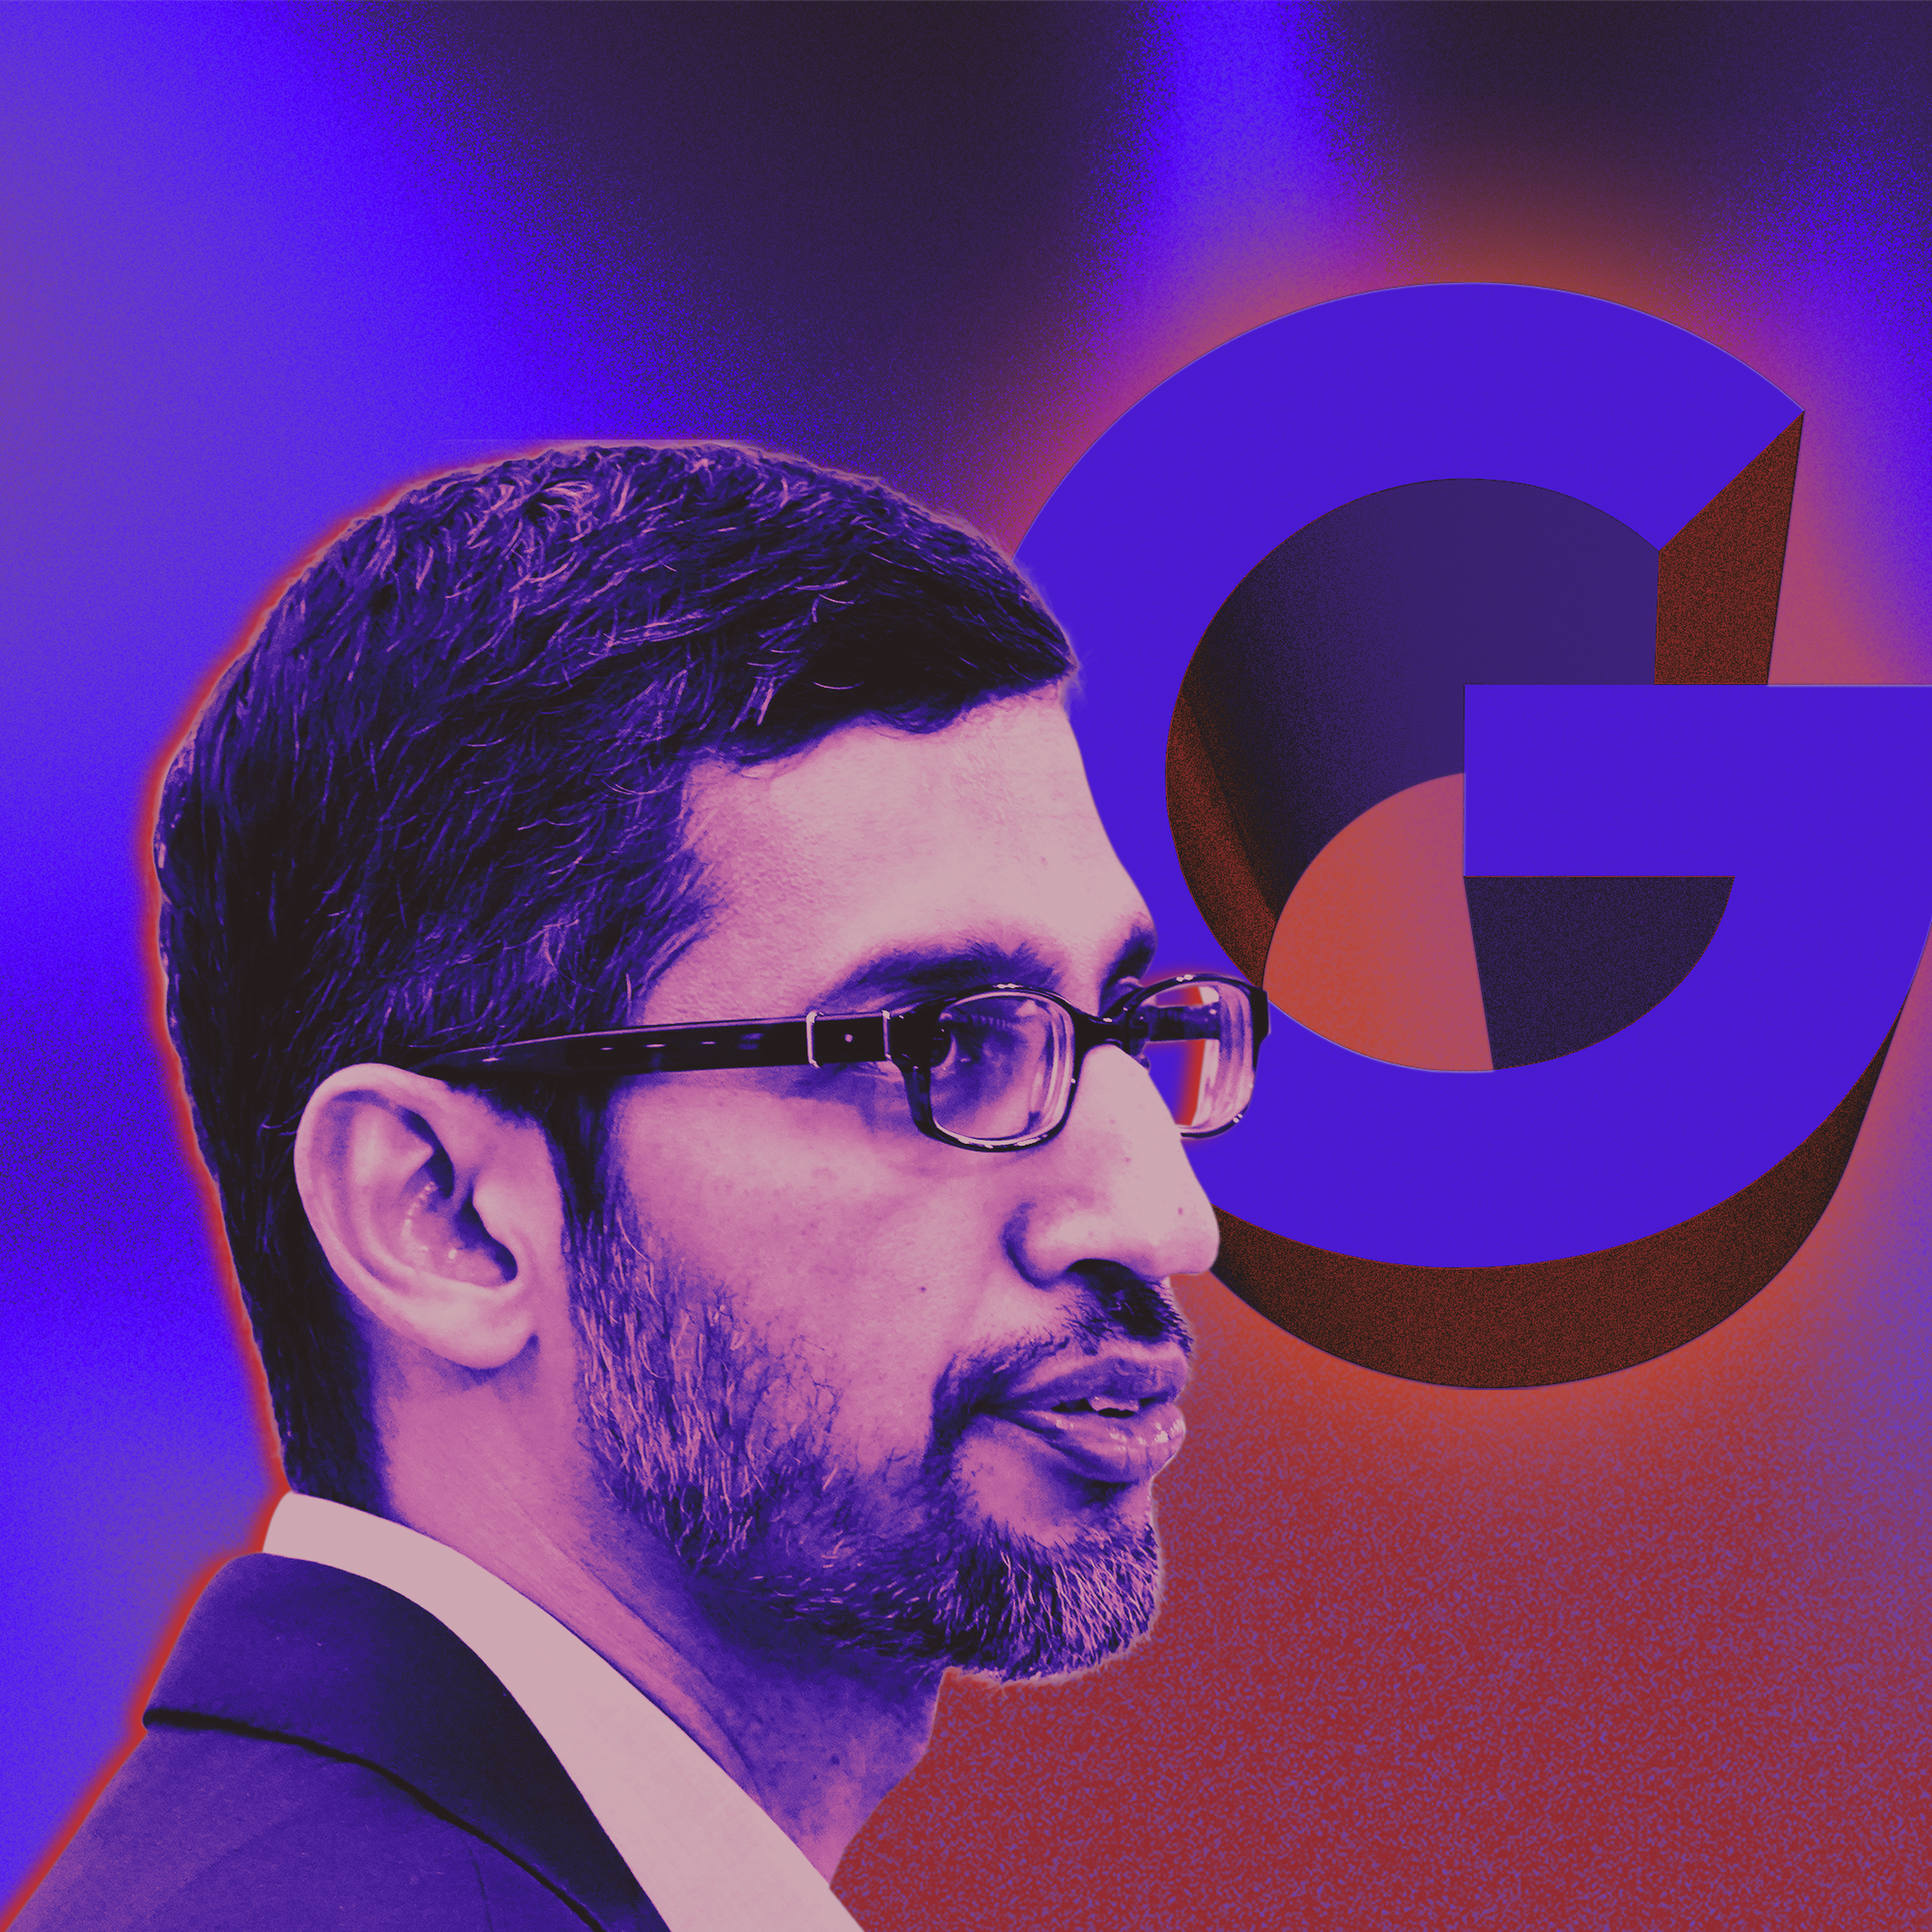 Photo illustration of Sundar Pichai in front of the Google logo